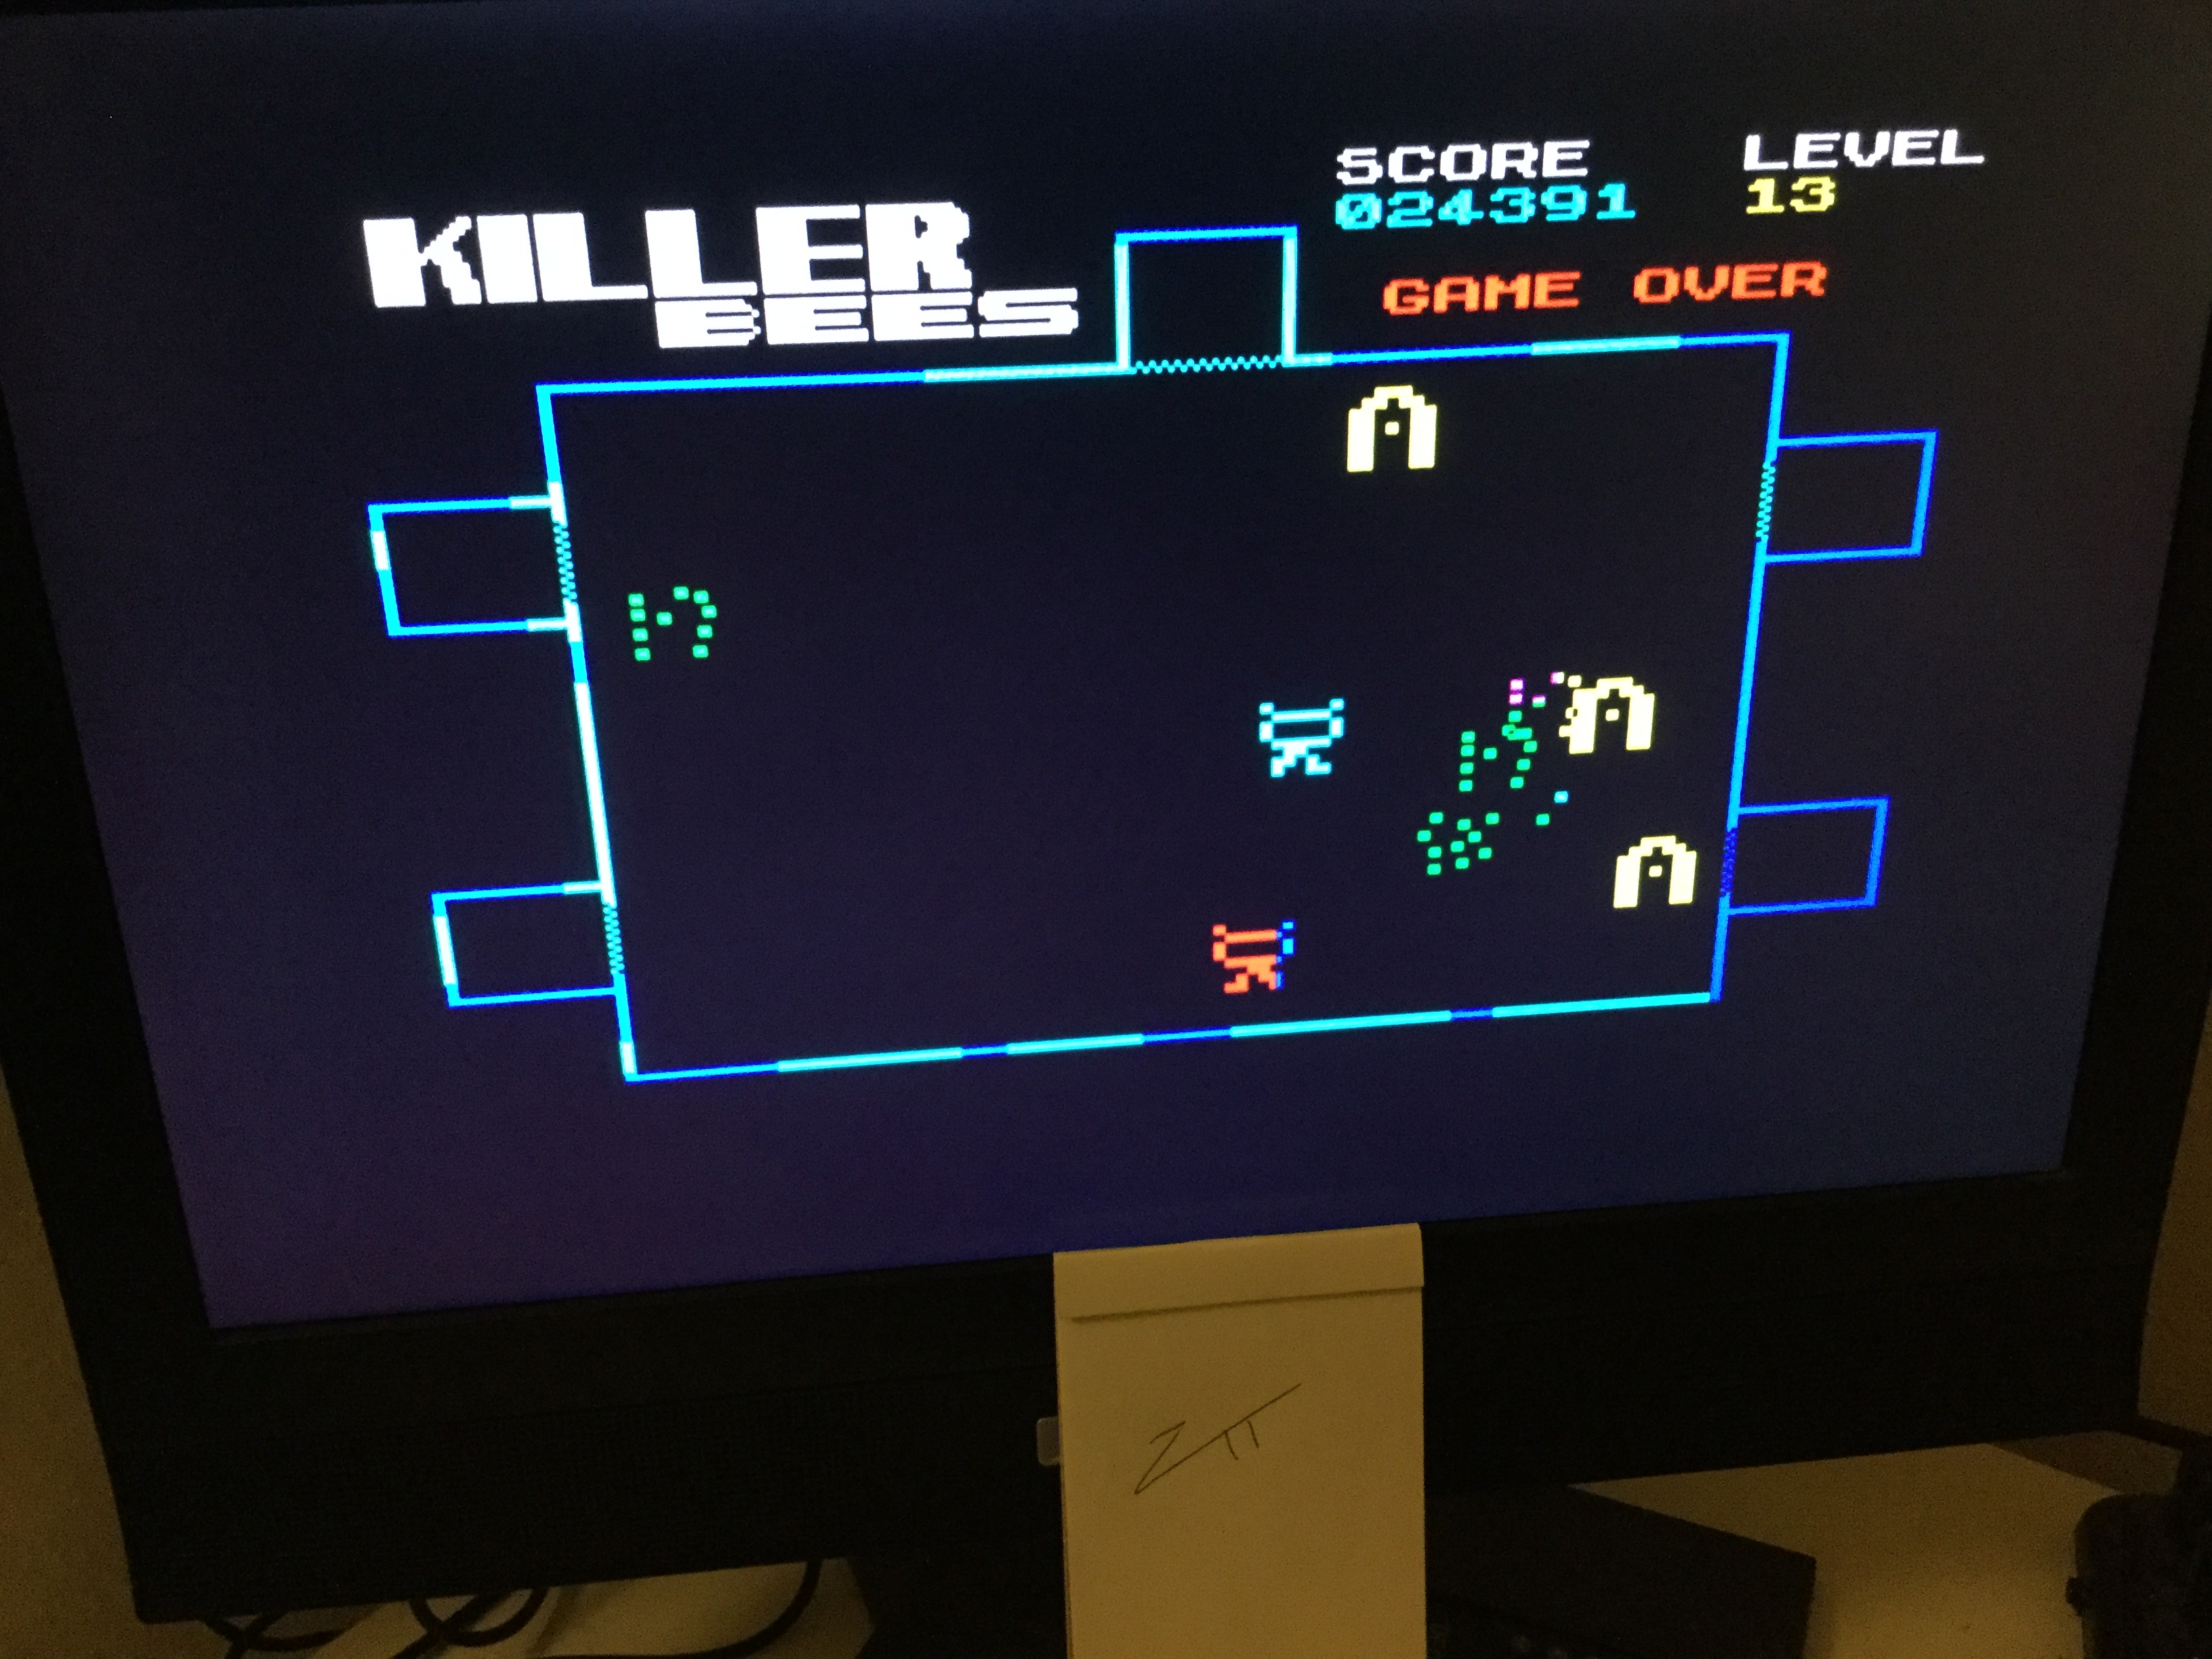 Frankie: Killer Bees [2014 Videopac Port] (ZX Spectrum) 24,391 points on 2022-02-11 04:50:23